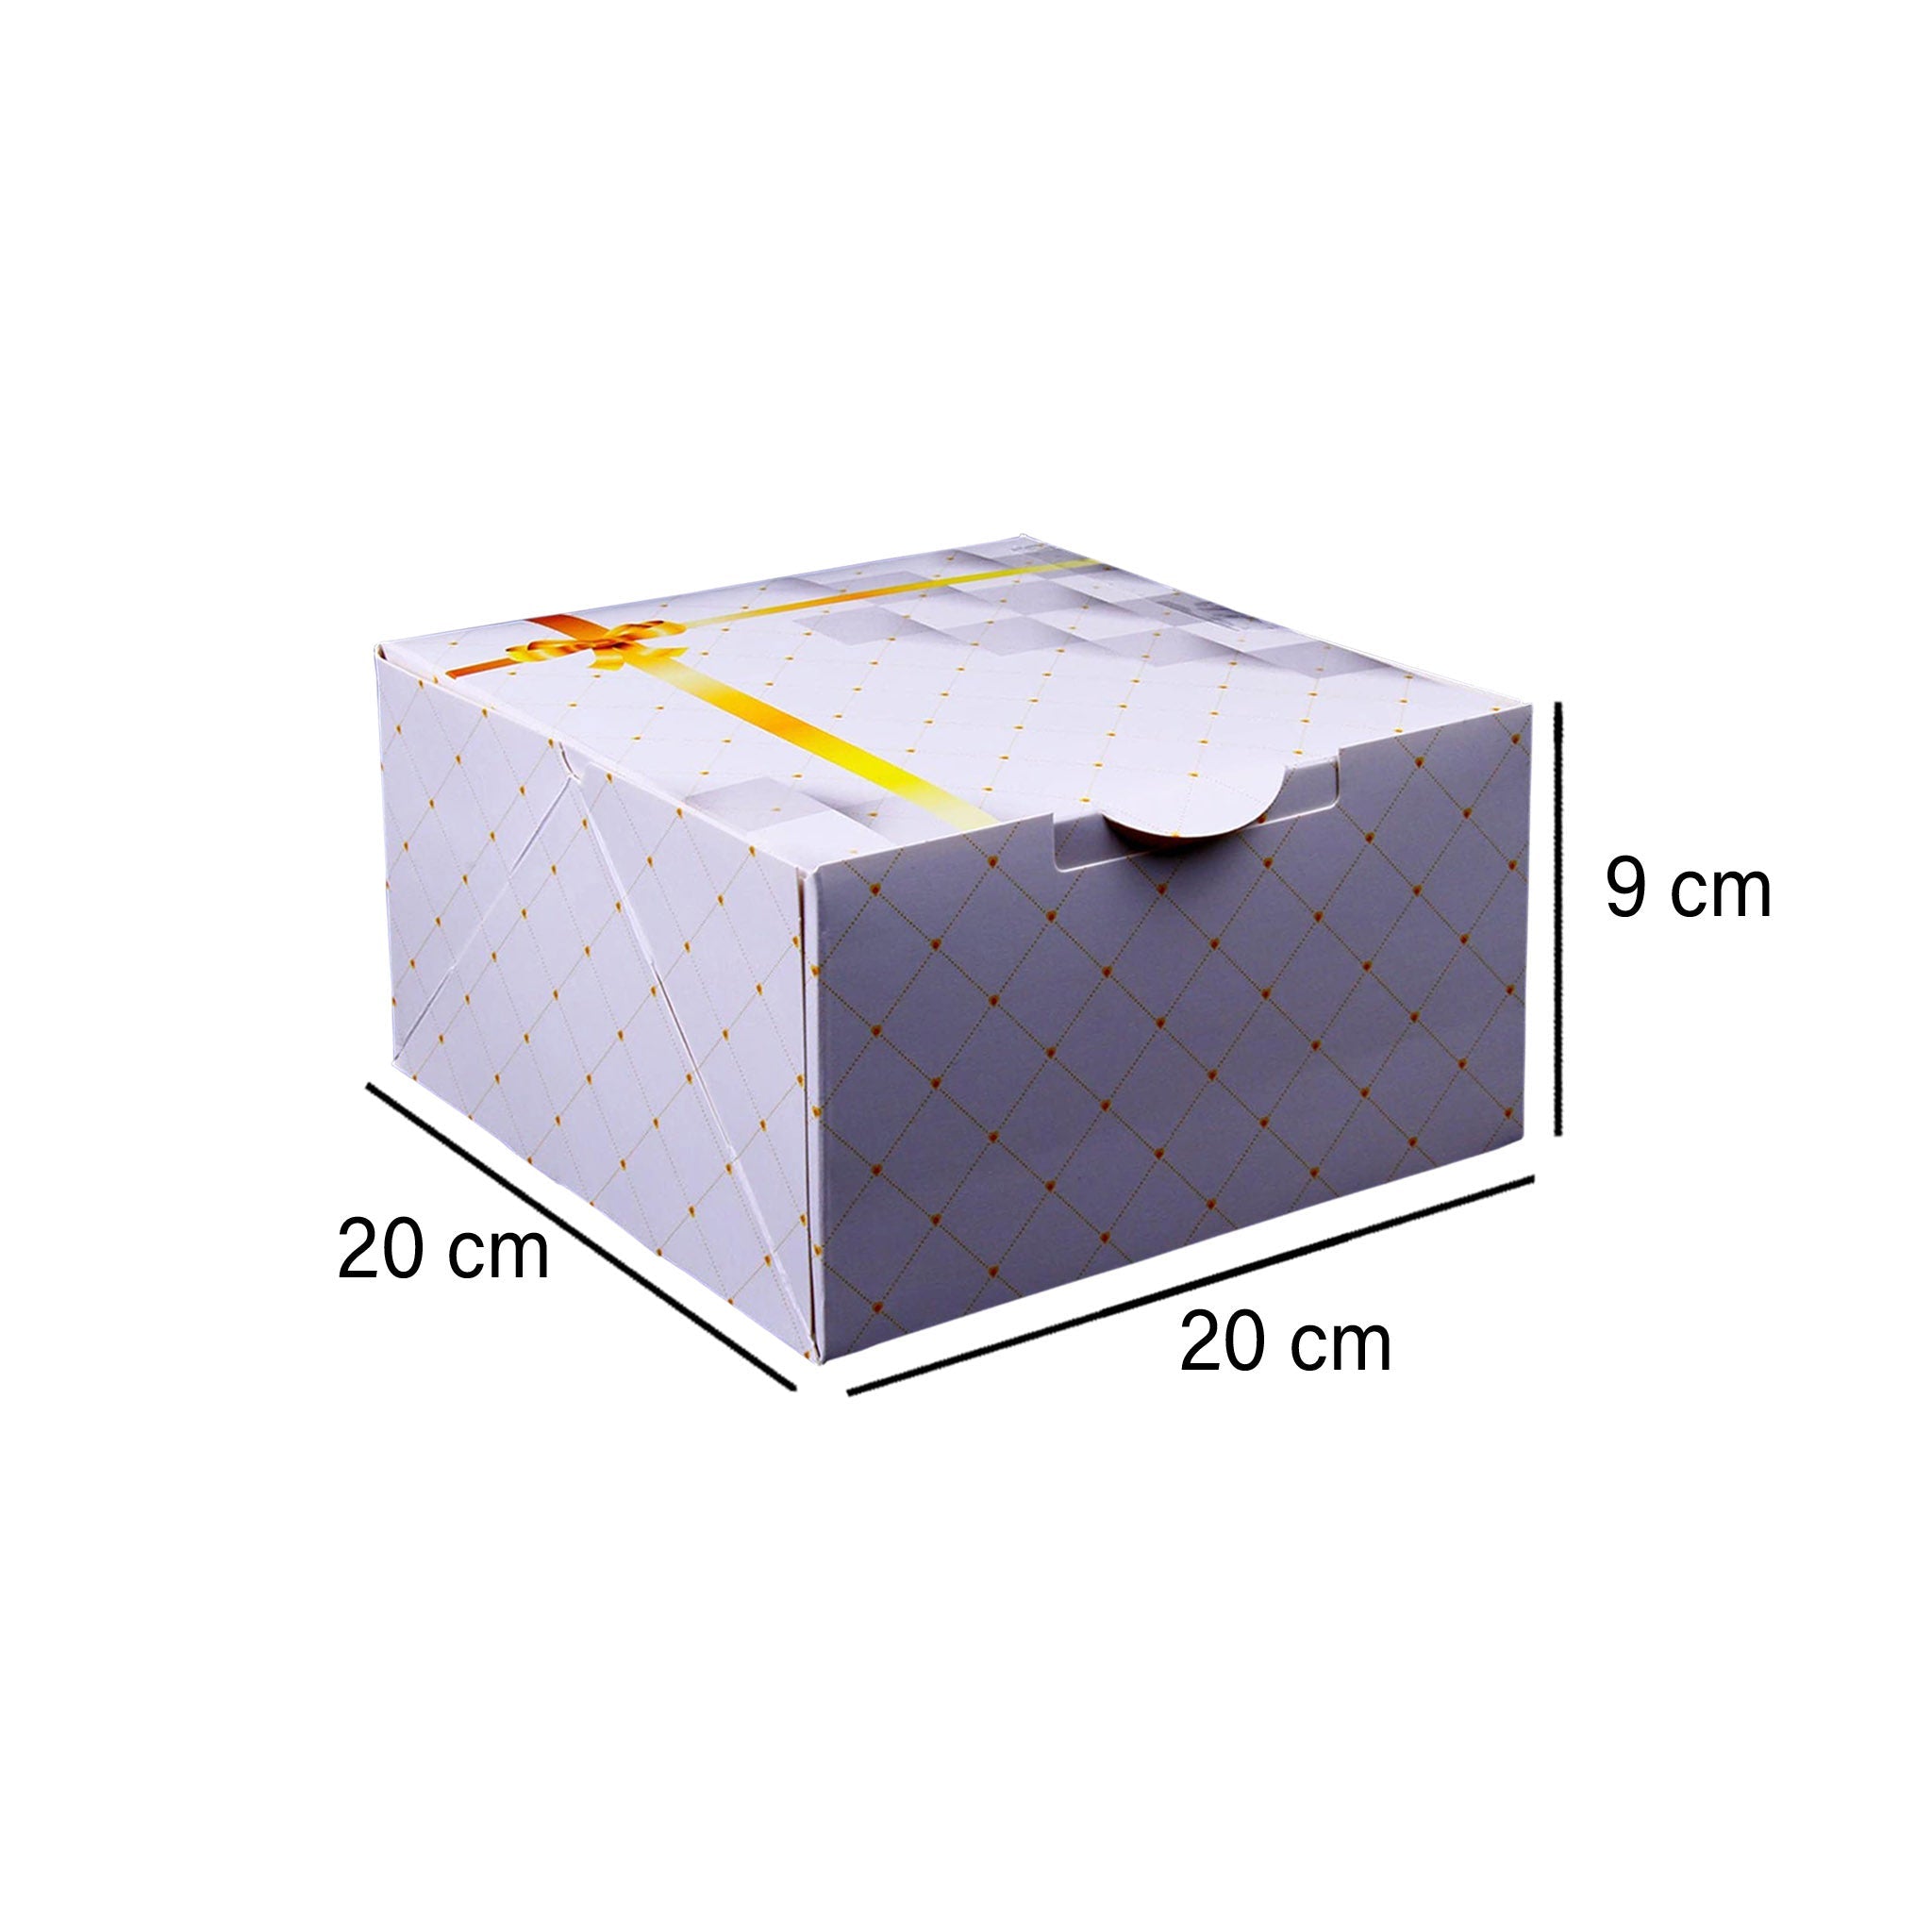 Printed Cake Box 20x20 Cm